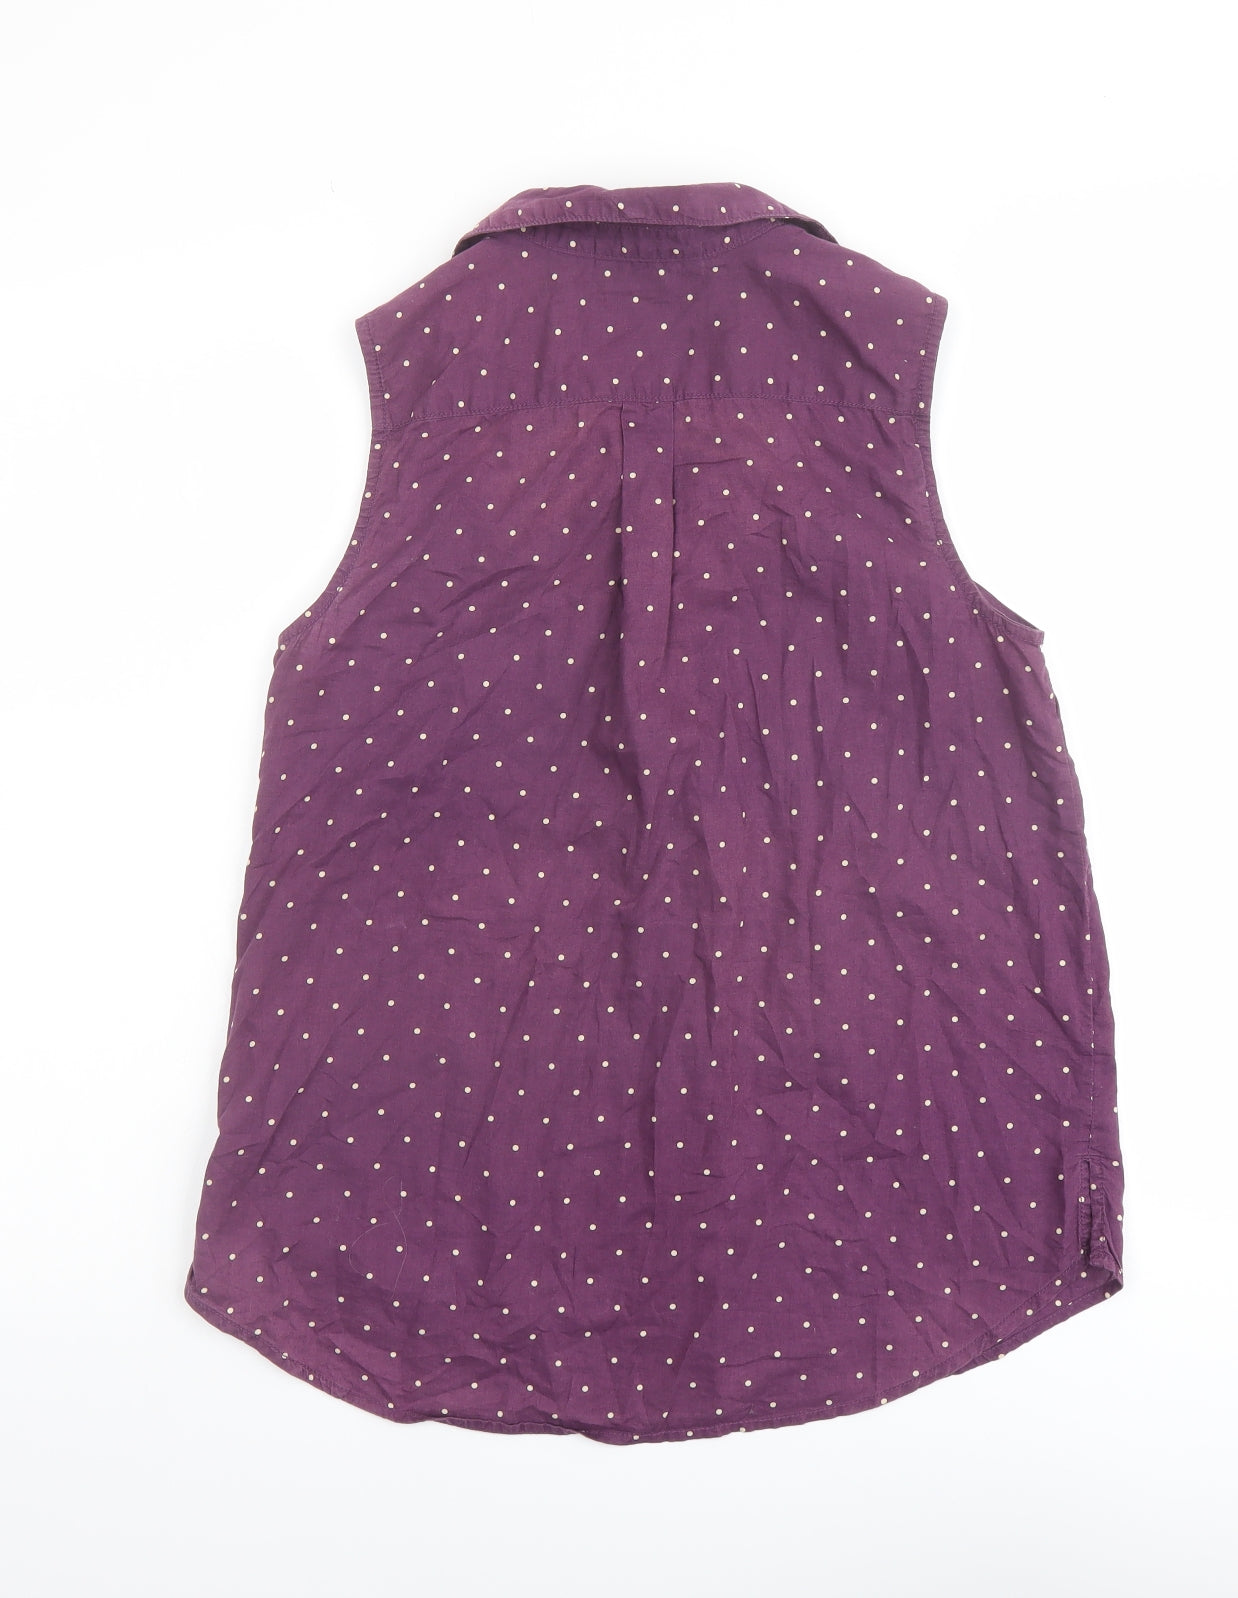 H&M Womens Purple Polka Dot Cotton Basic Button-Up Size 8 Collared